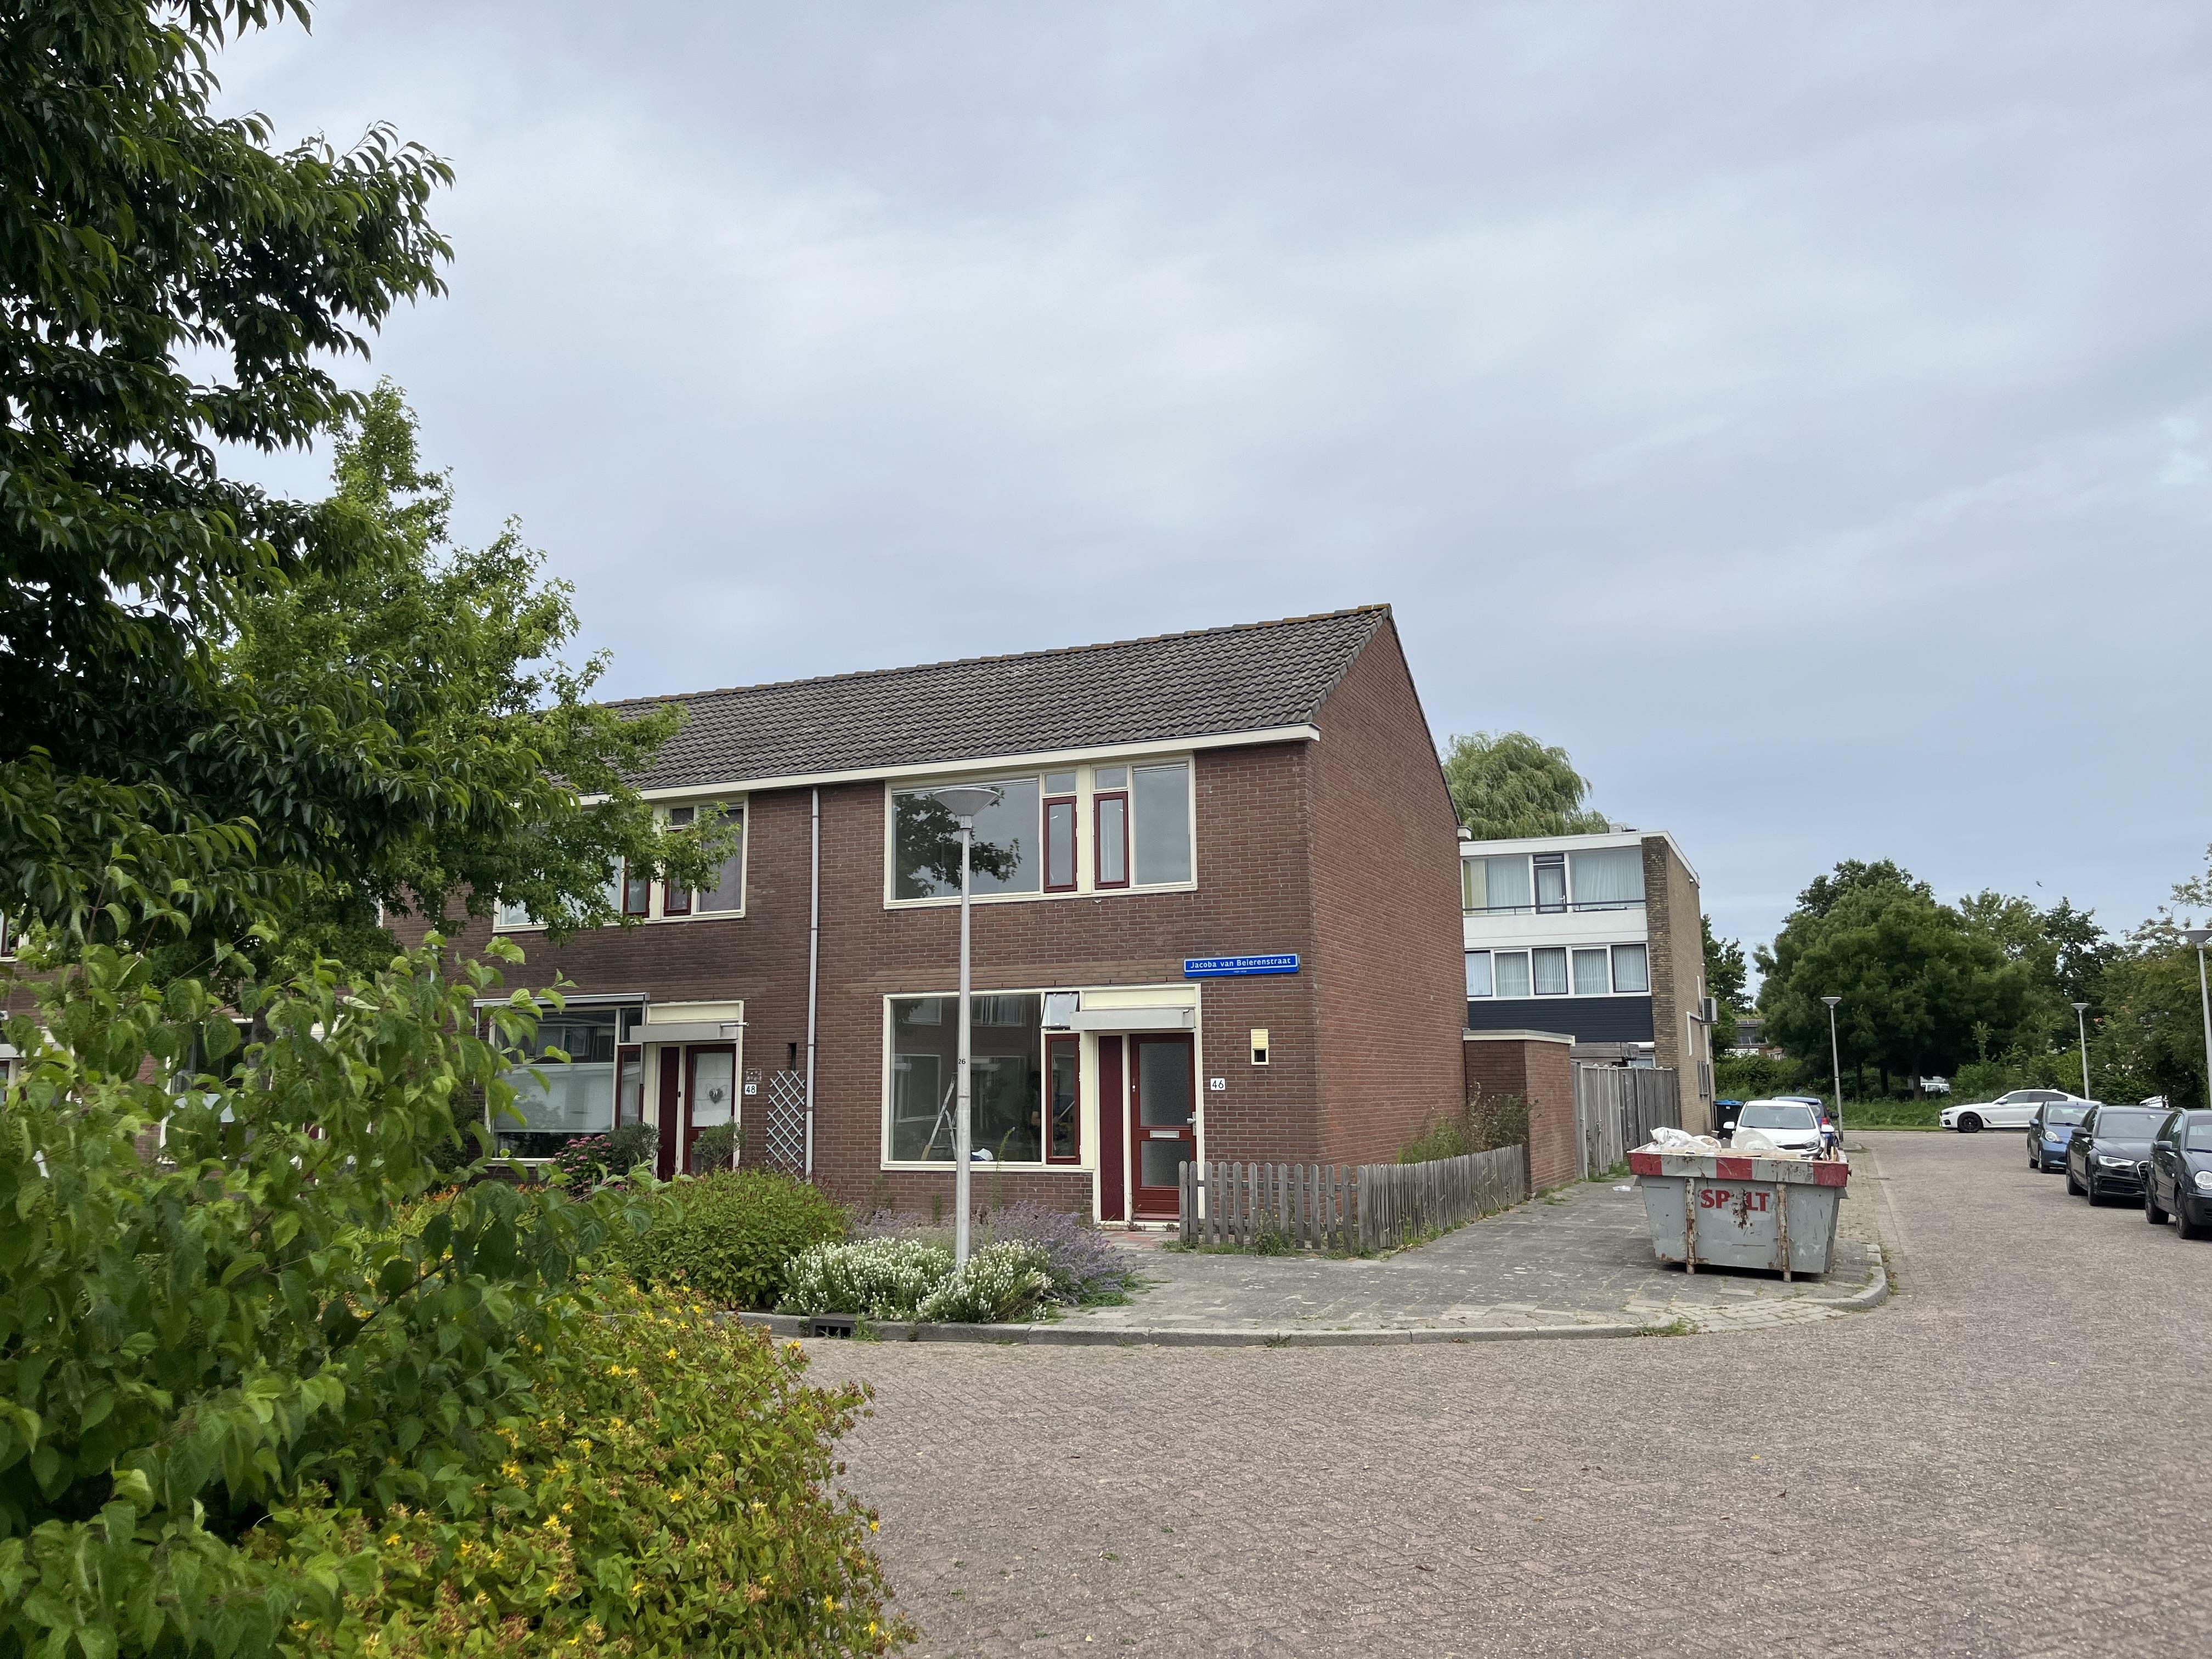 Jacoba van Beierenstraat 46, 3232 VT Brielle, Nederland